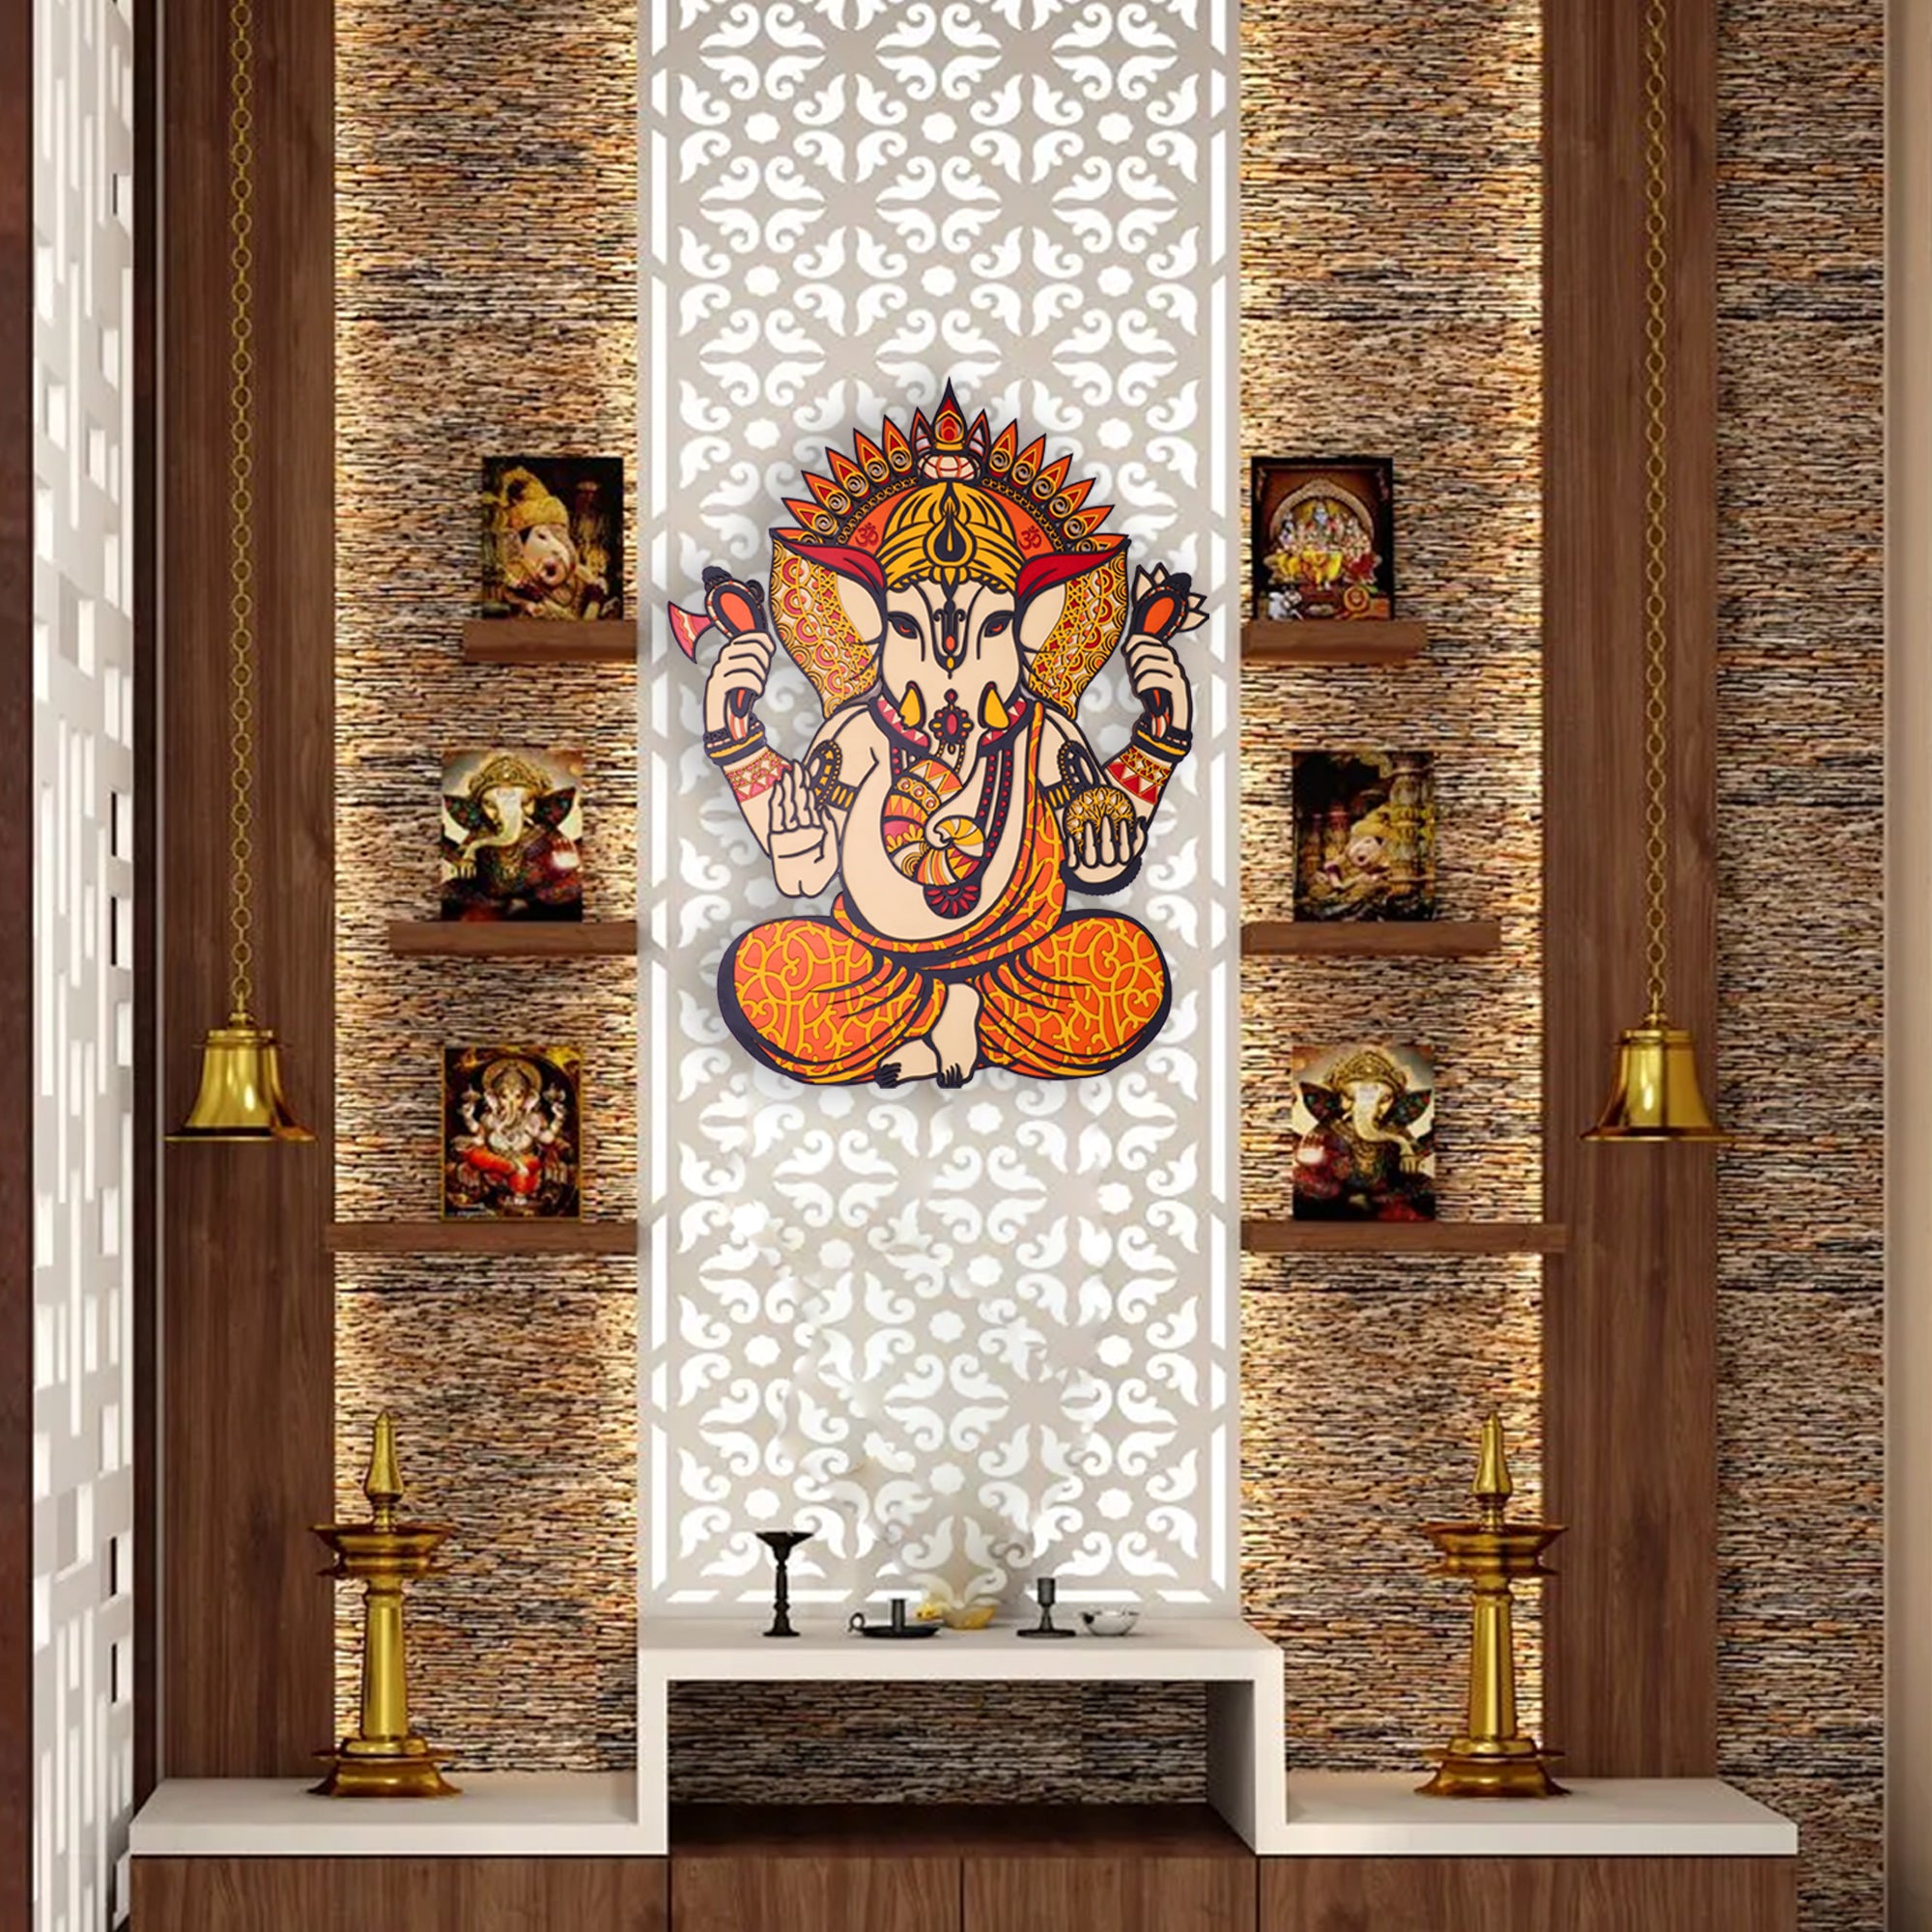 3D Lord Ganesha Wall Art